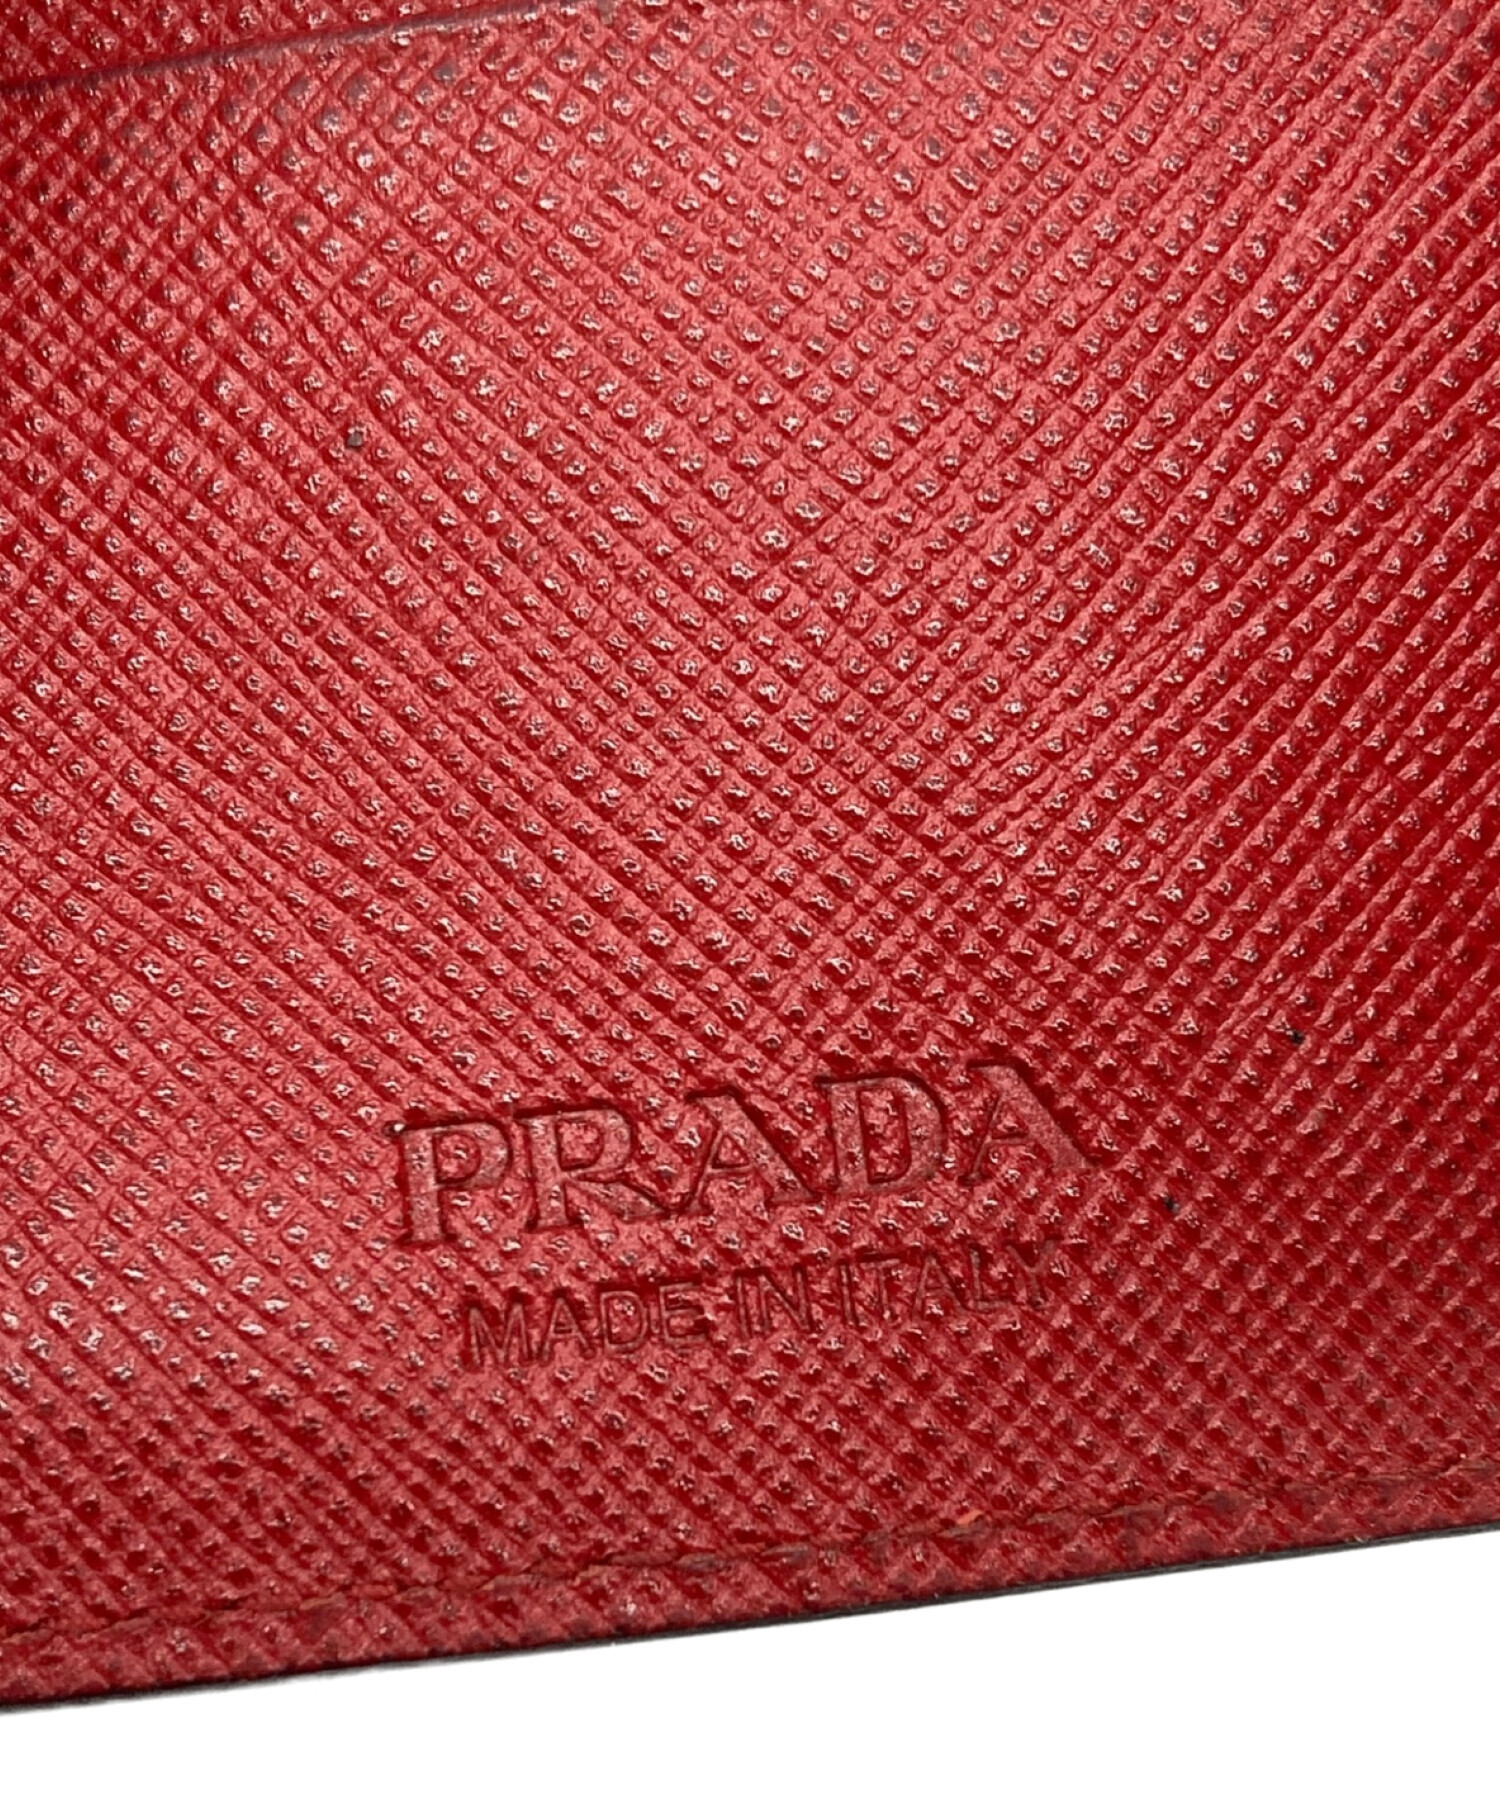 PRADA (プラダ) マネークリップ2つ折り財布 ブラック